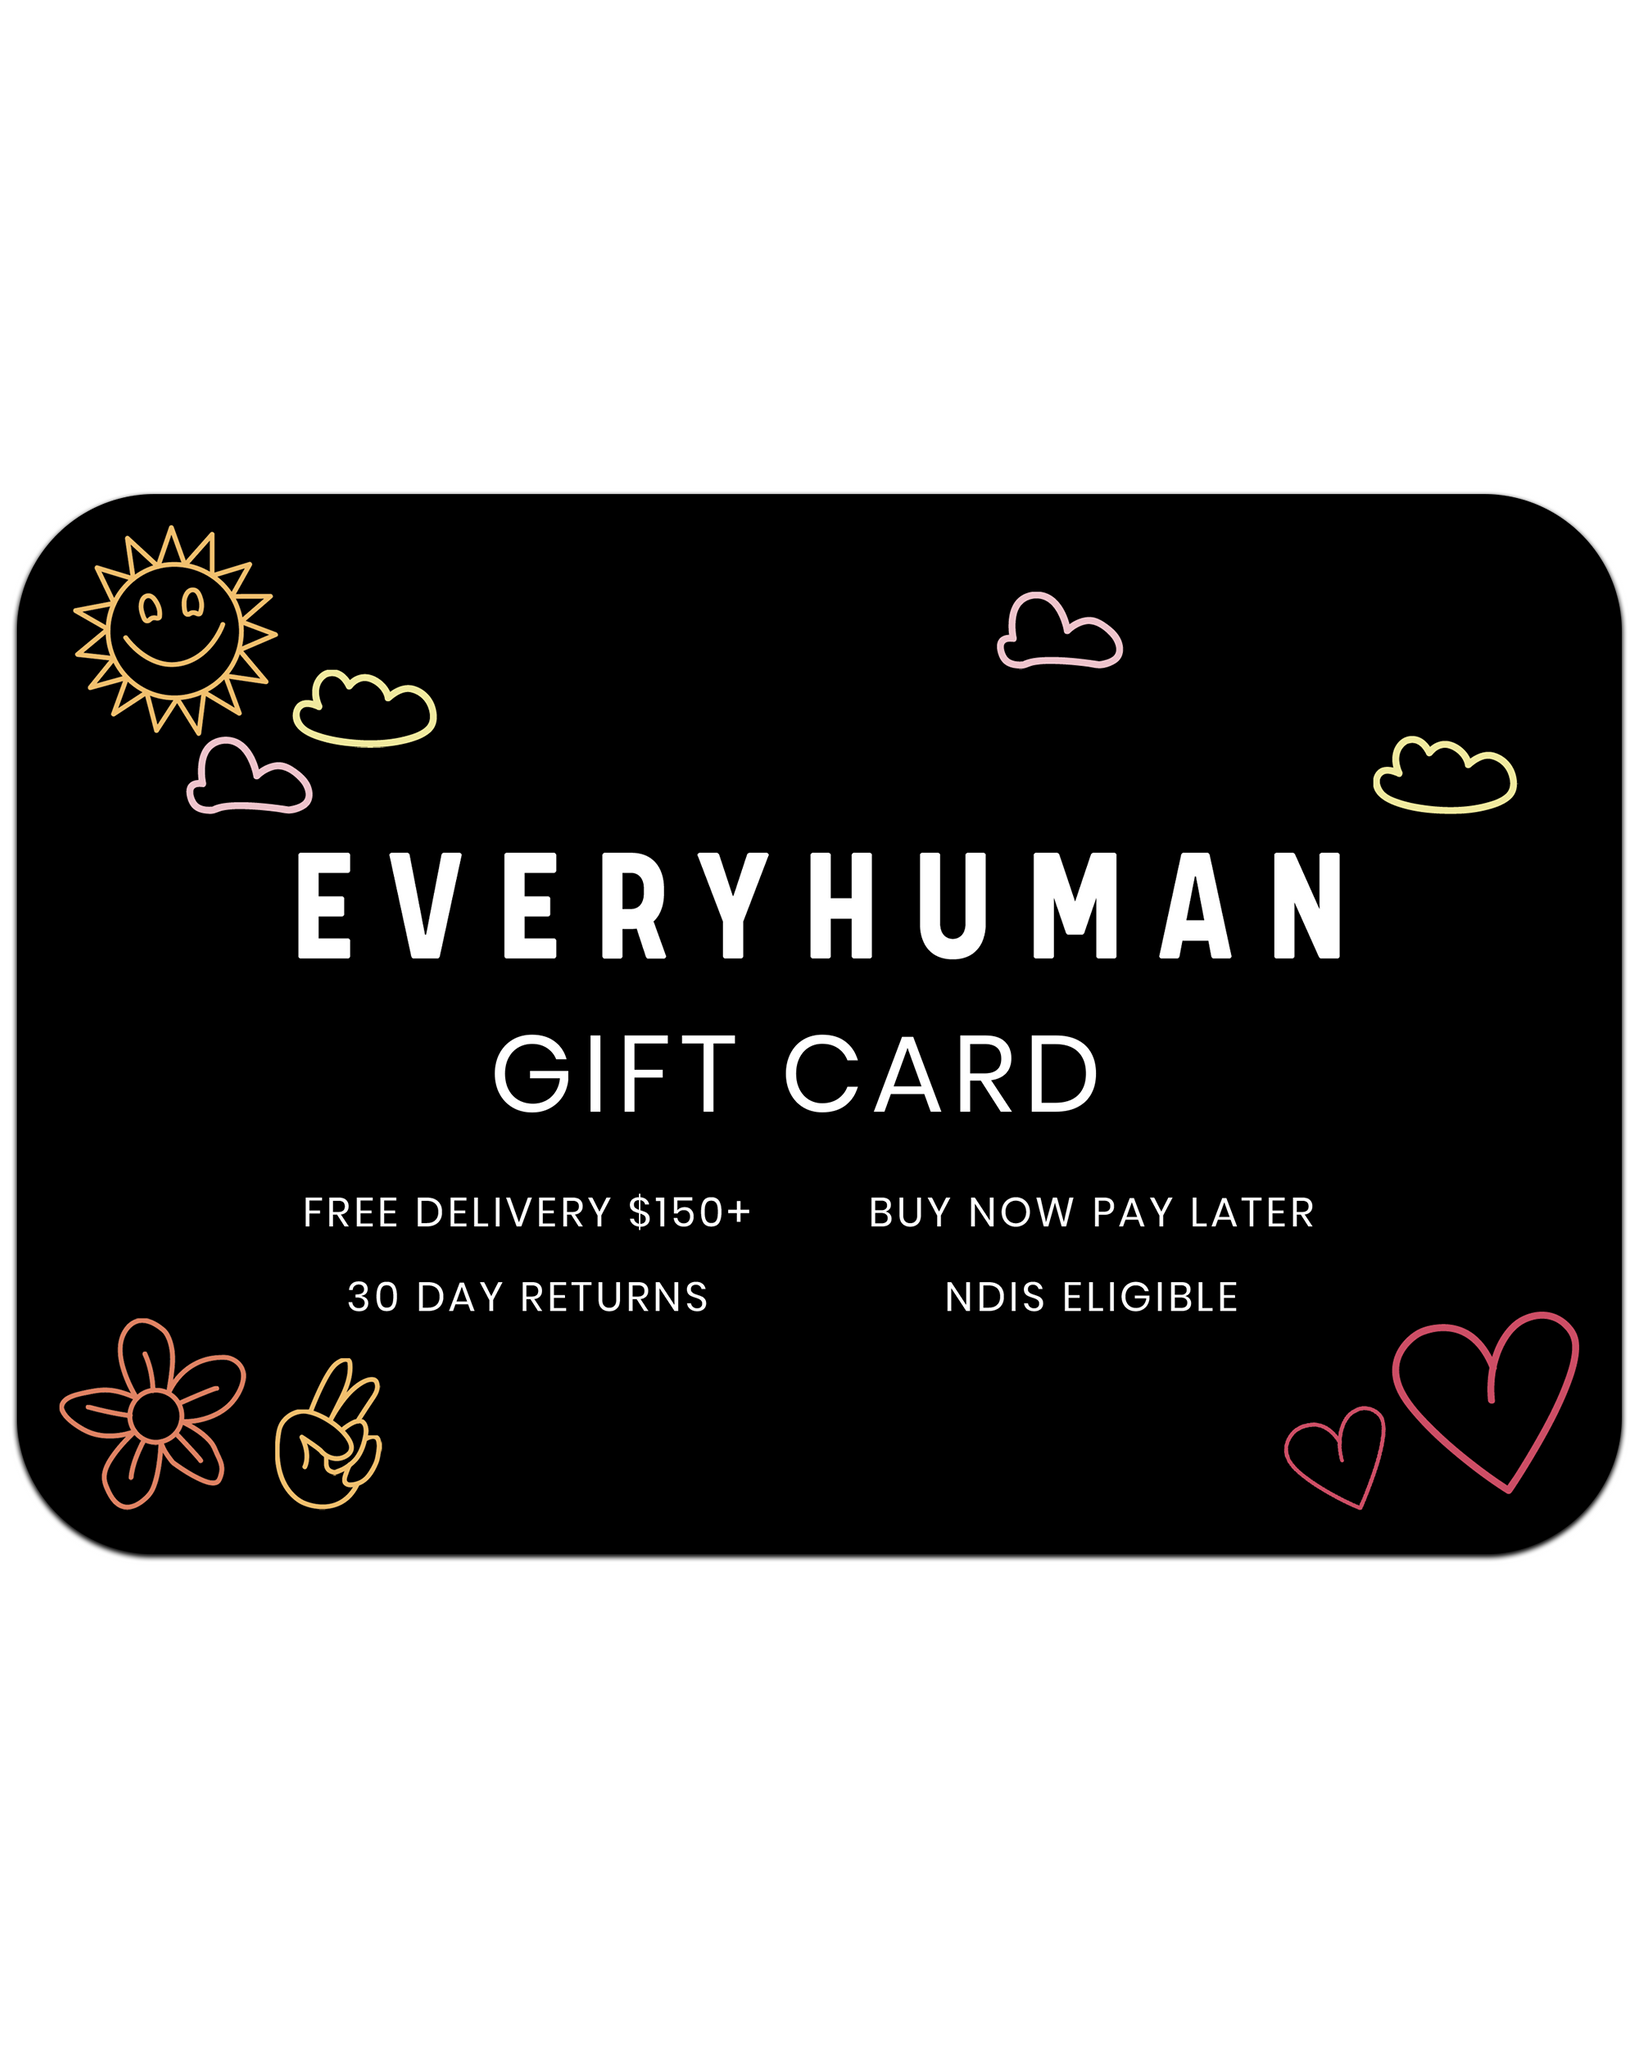 EveryHuman Gift Card